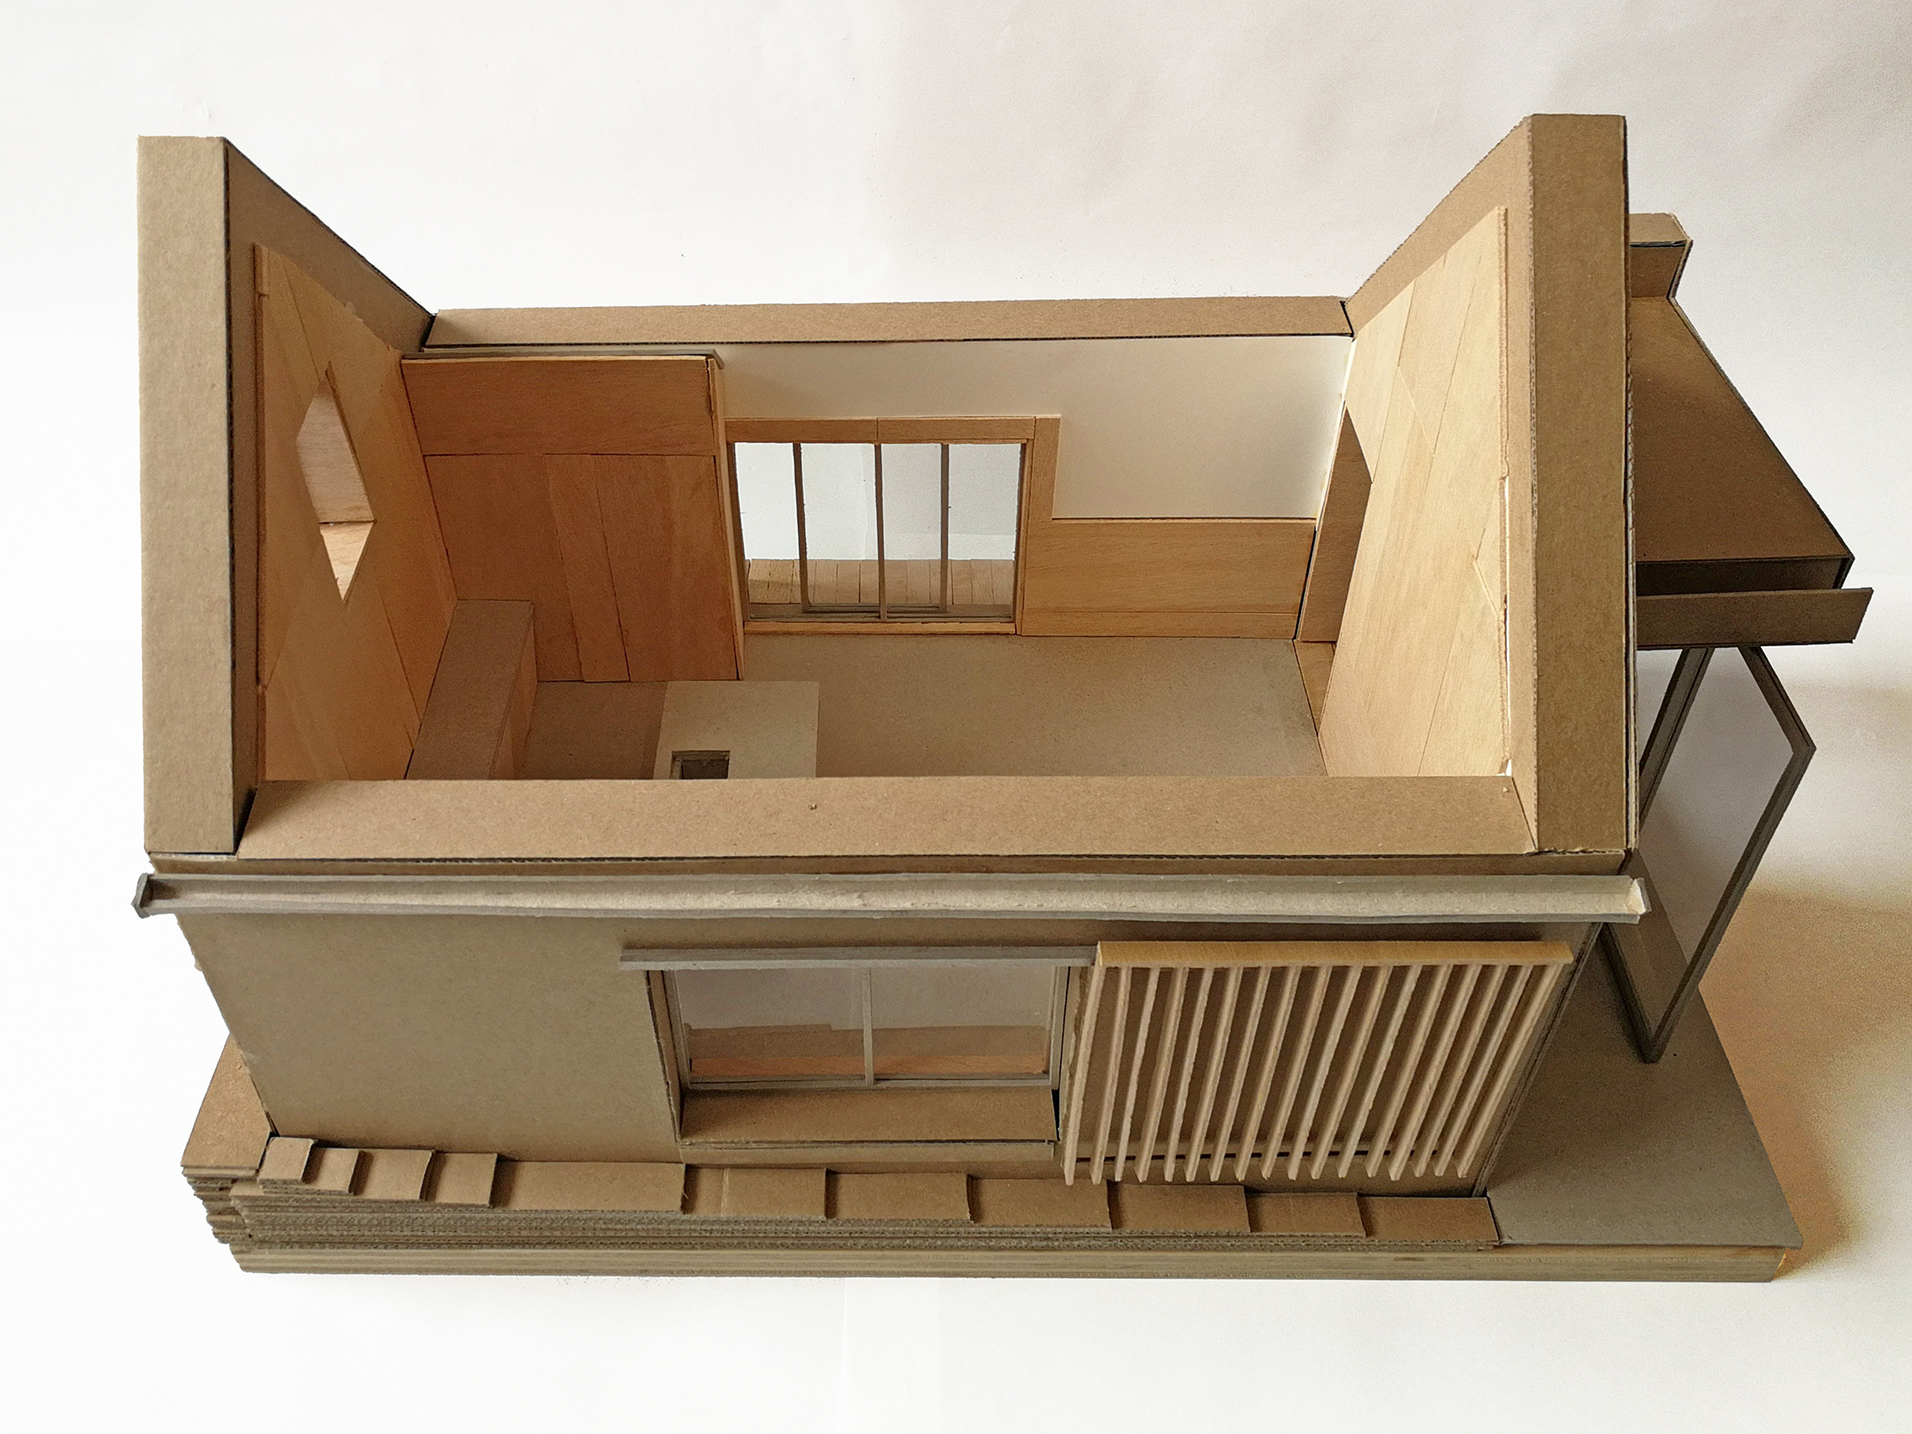 harper-perry-architects-barn-conversion-model-development-internal-layout-open-kitchen